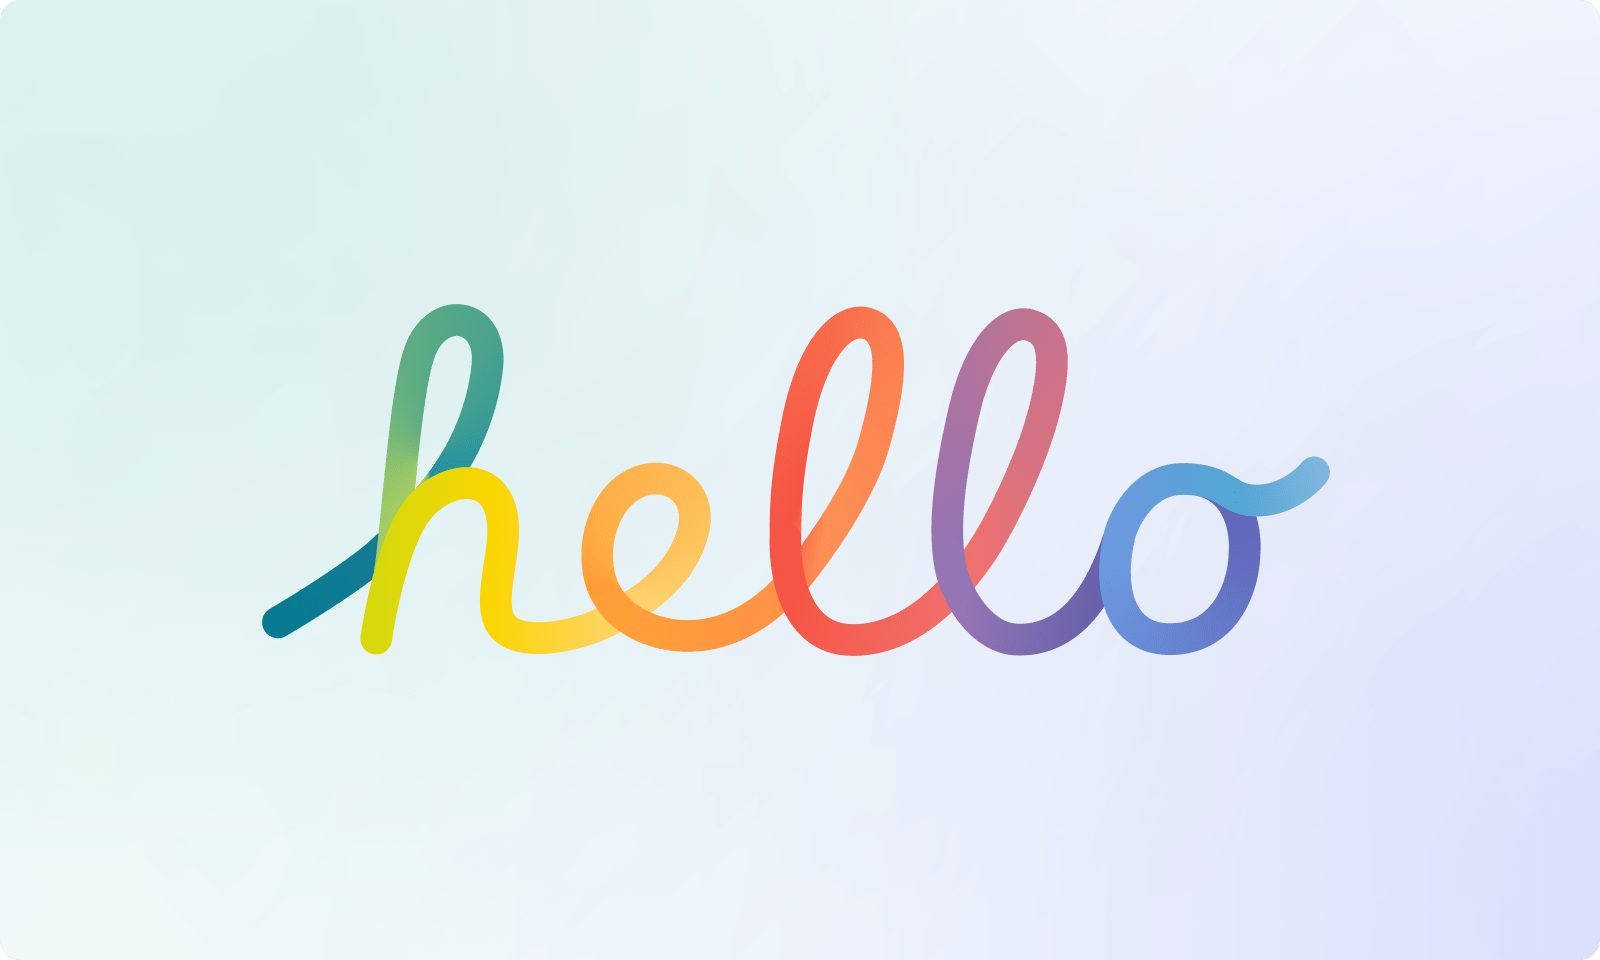 Hello in a cursive rainbow color font.